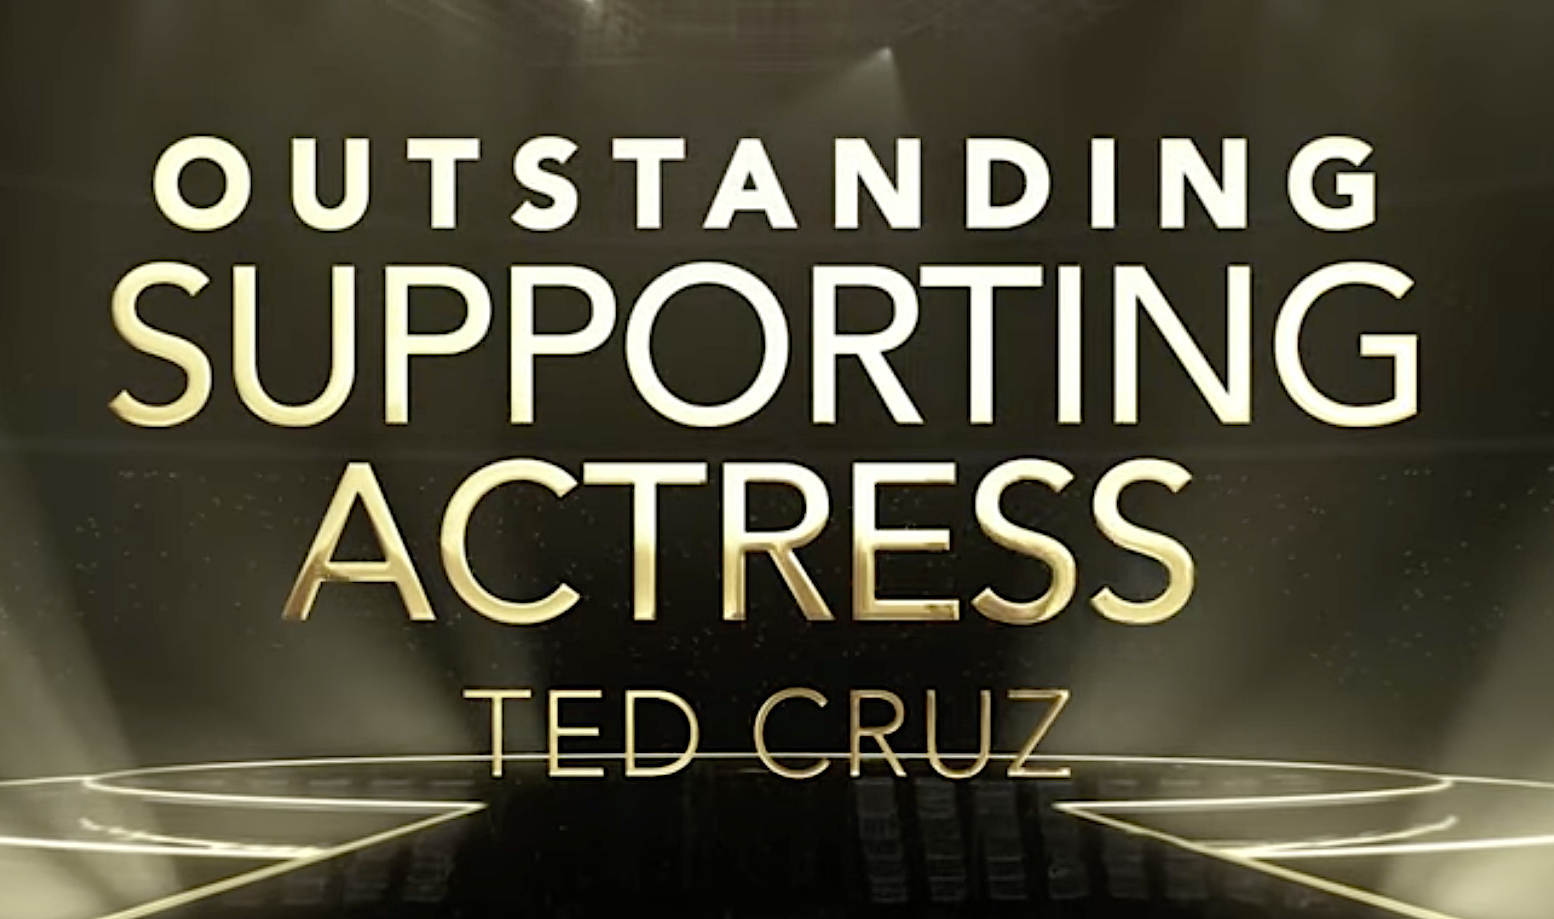 Ted Cruz wins a prize